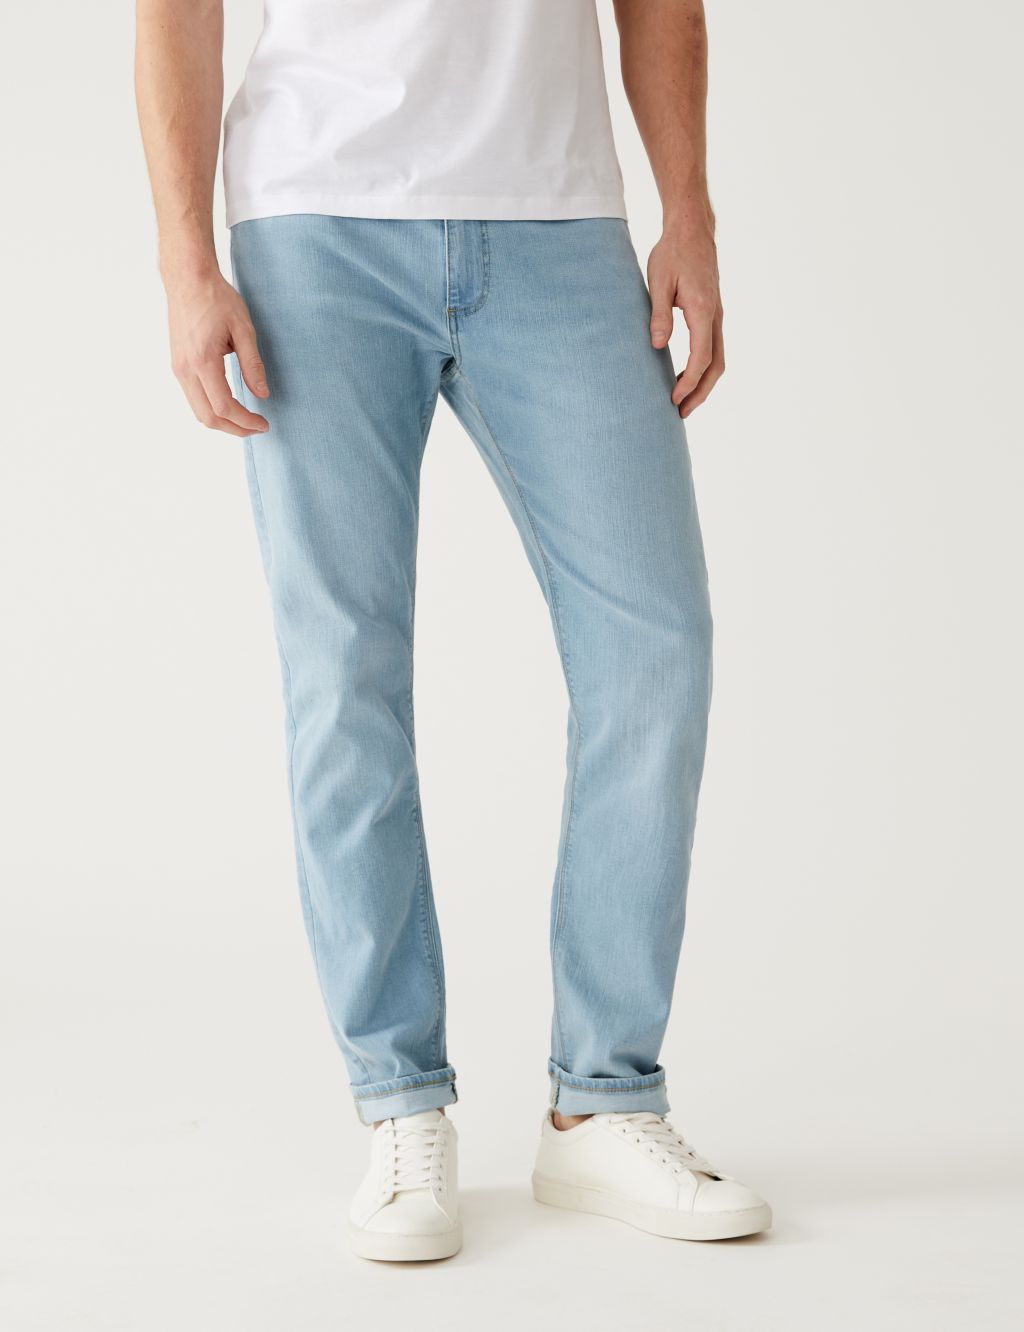 Slim Fit Stretch Jeans image 1